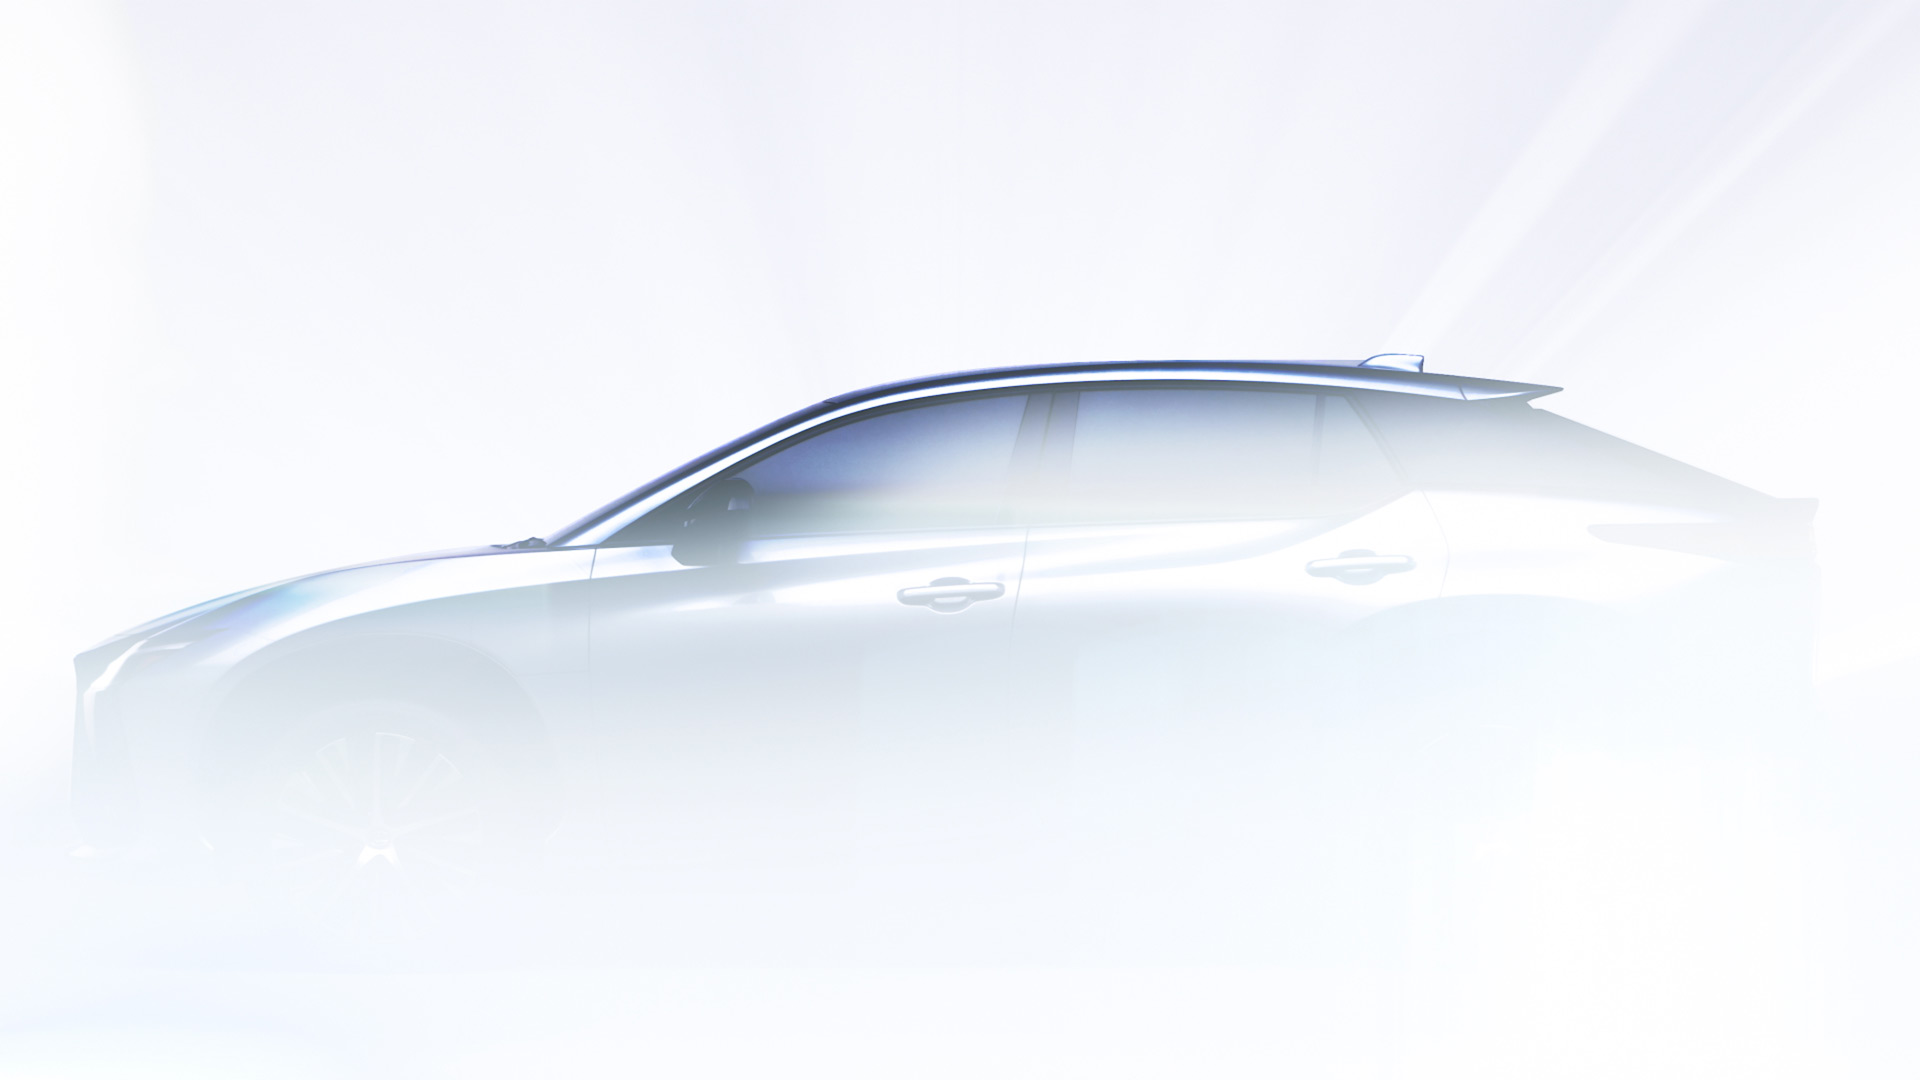 Lexus teases RZ electric SUV due in 2022Lexus teases RZ electric SUV due in 2022